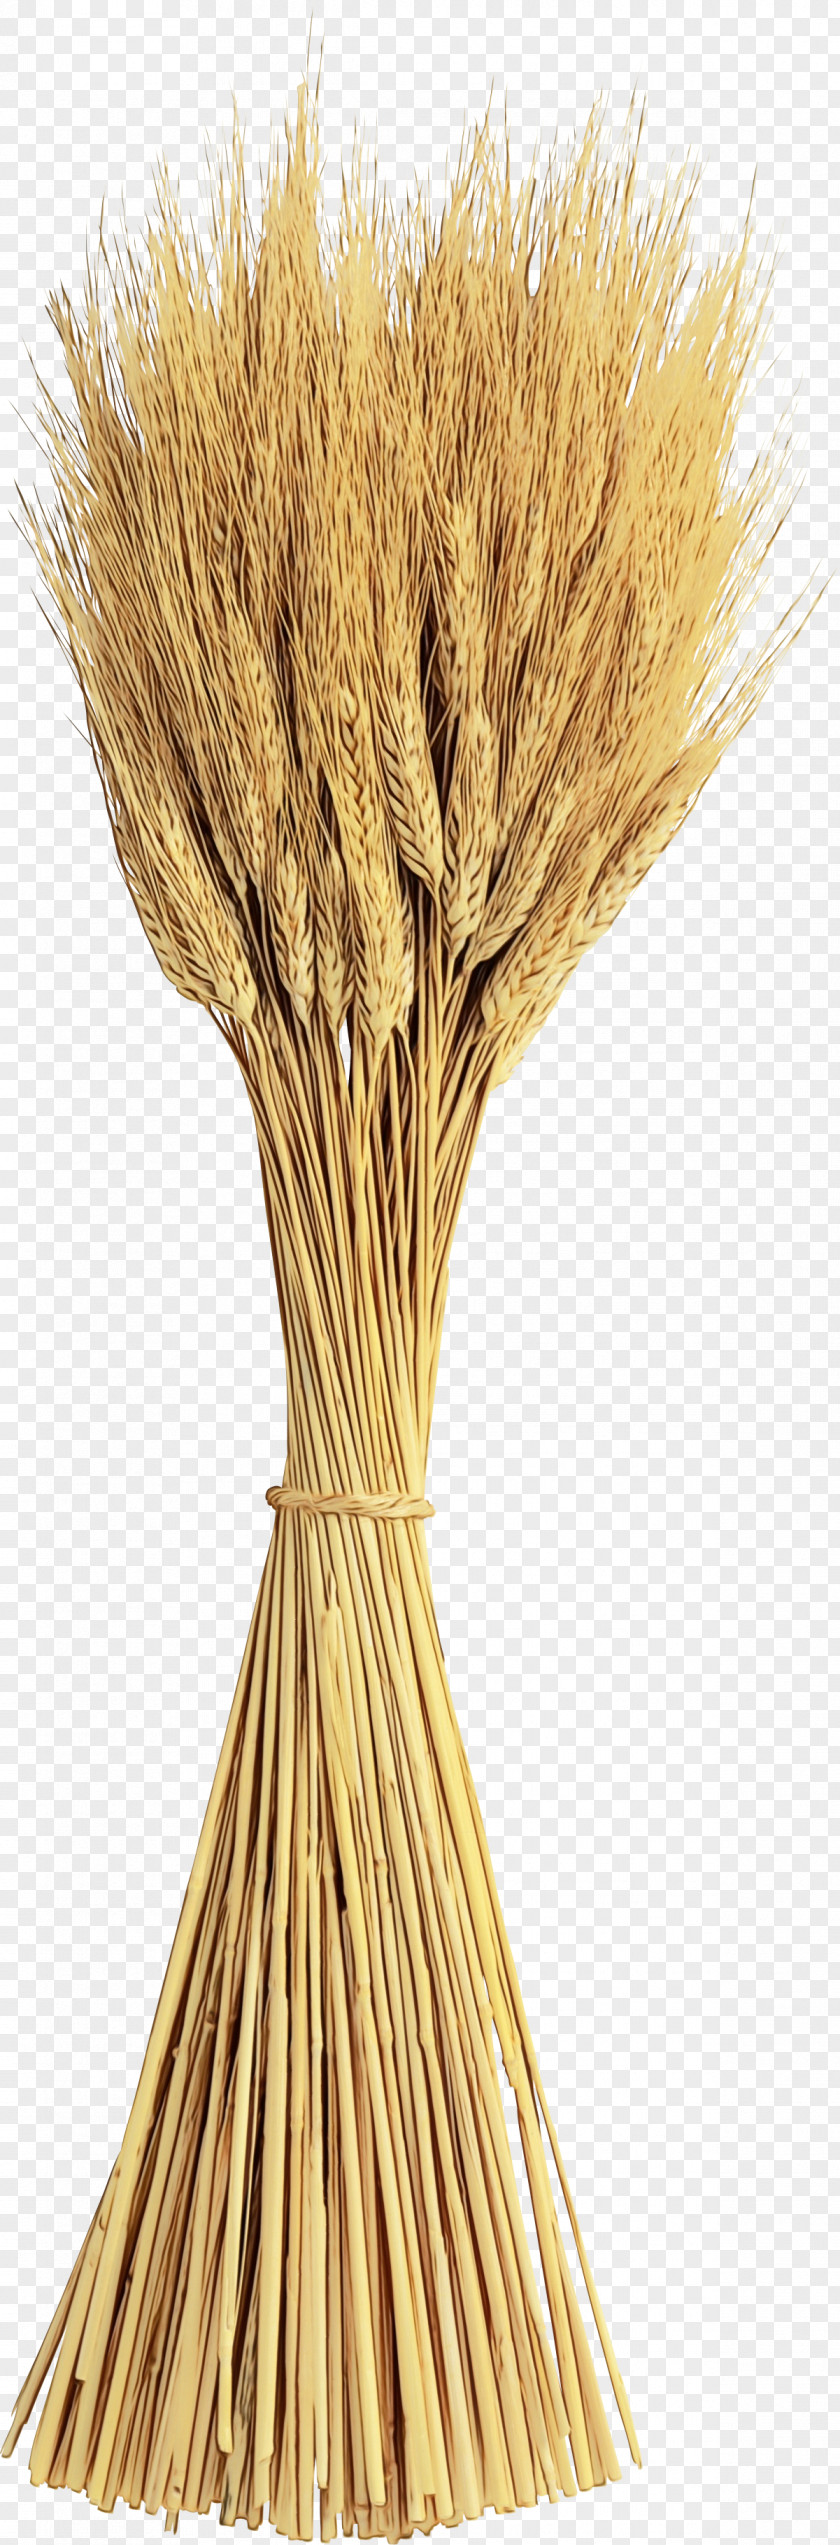 Broom Plant Wheat Cartoon PNG